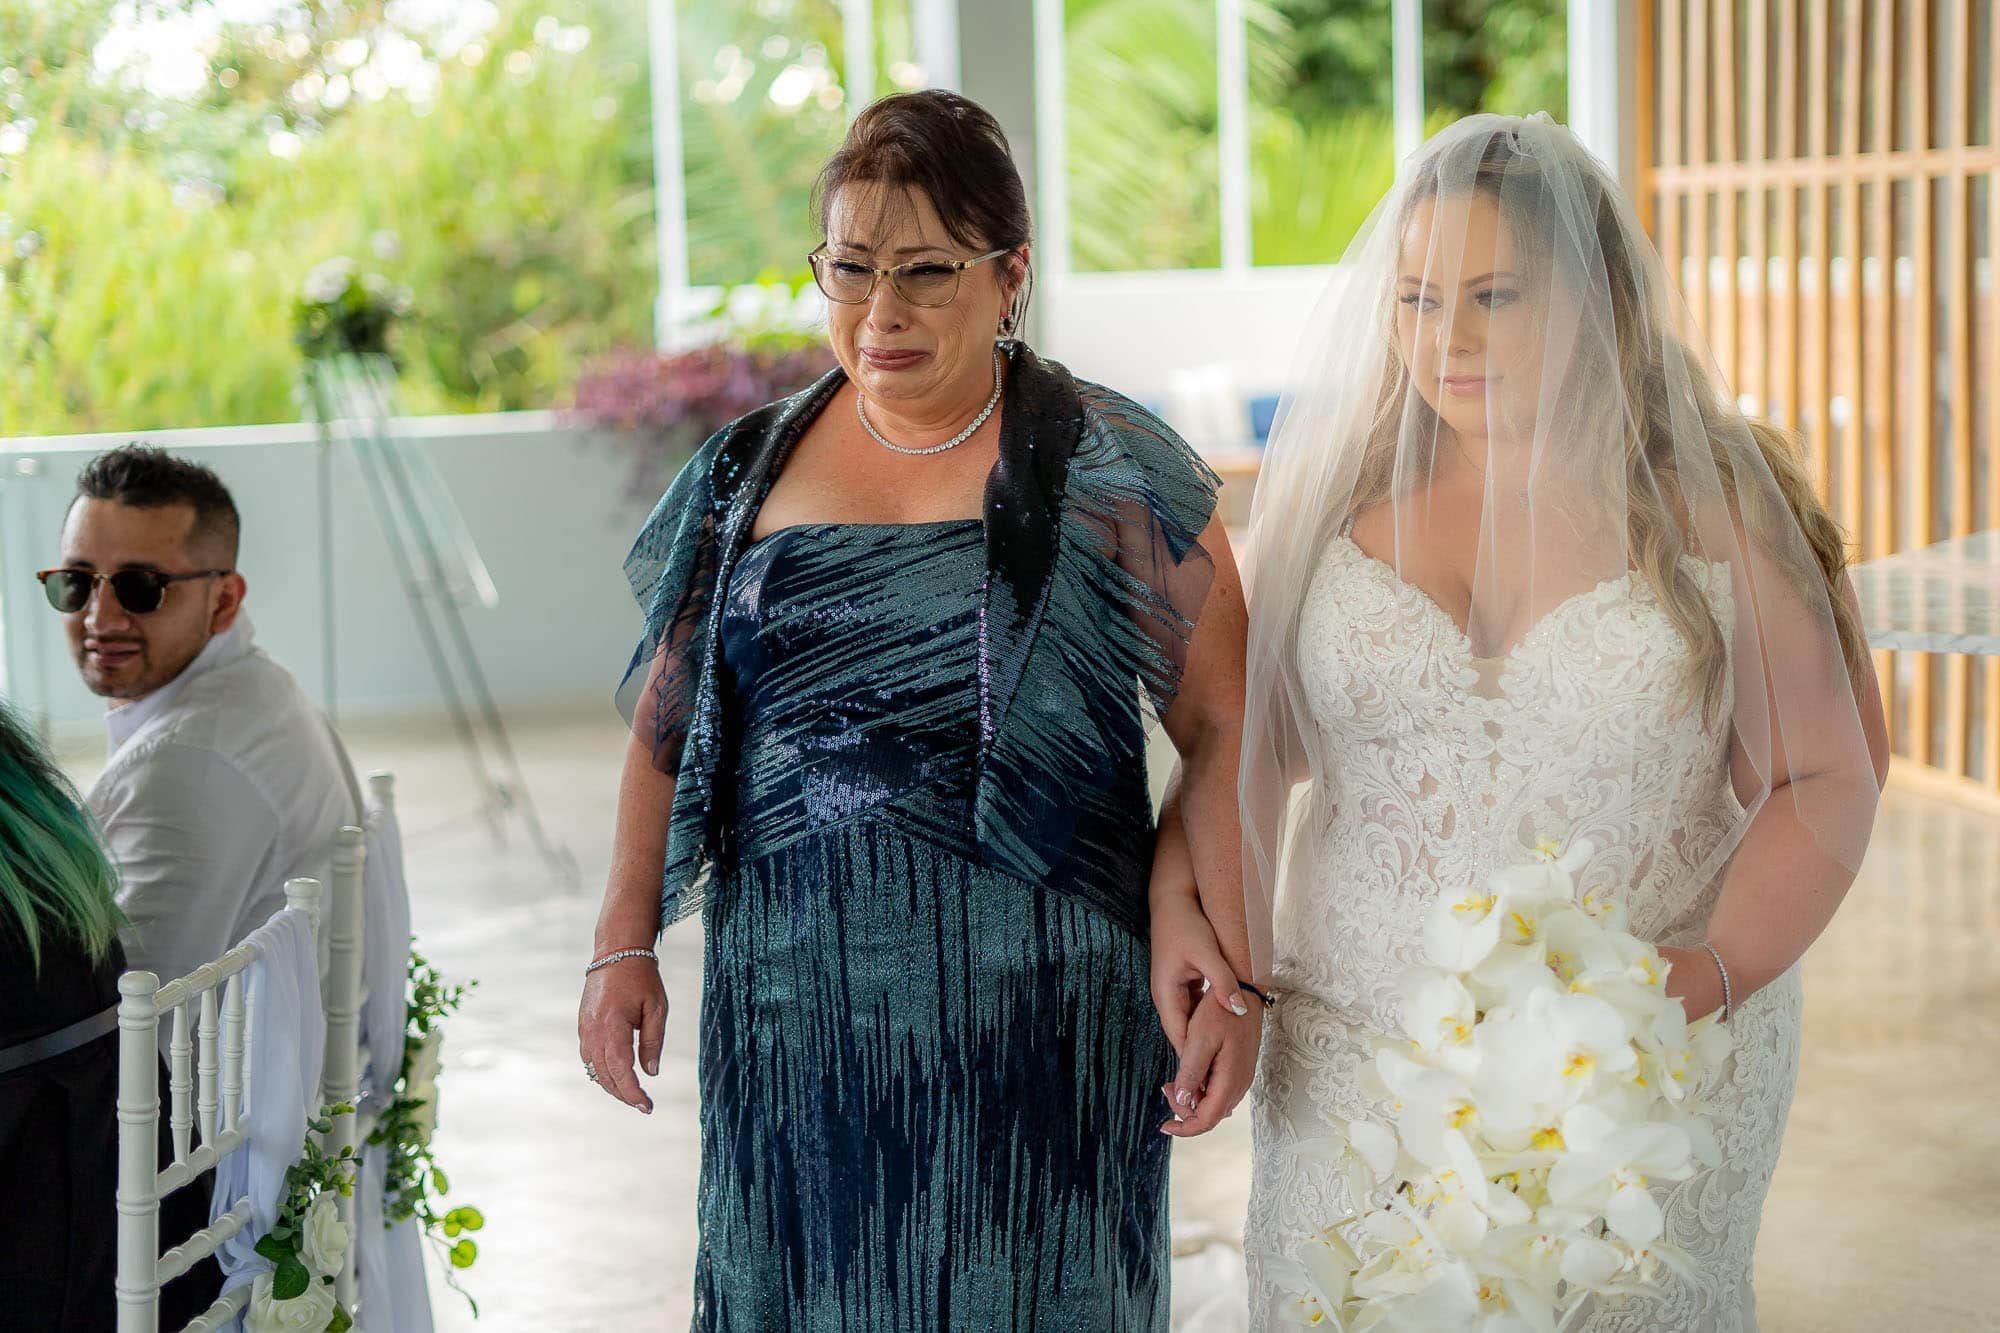 Mom cries as she walks the bride down the aisle